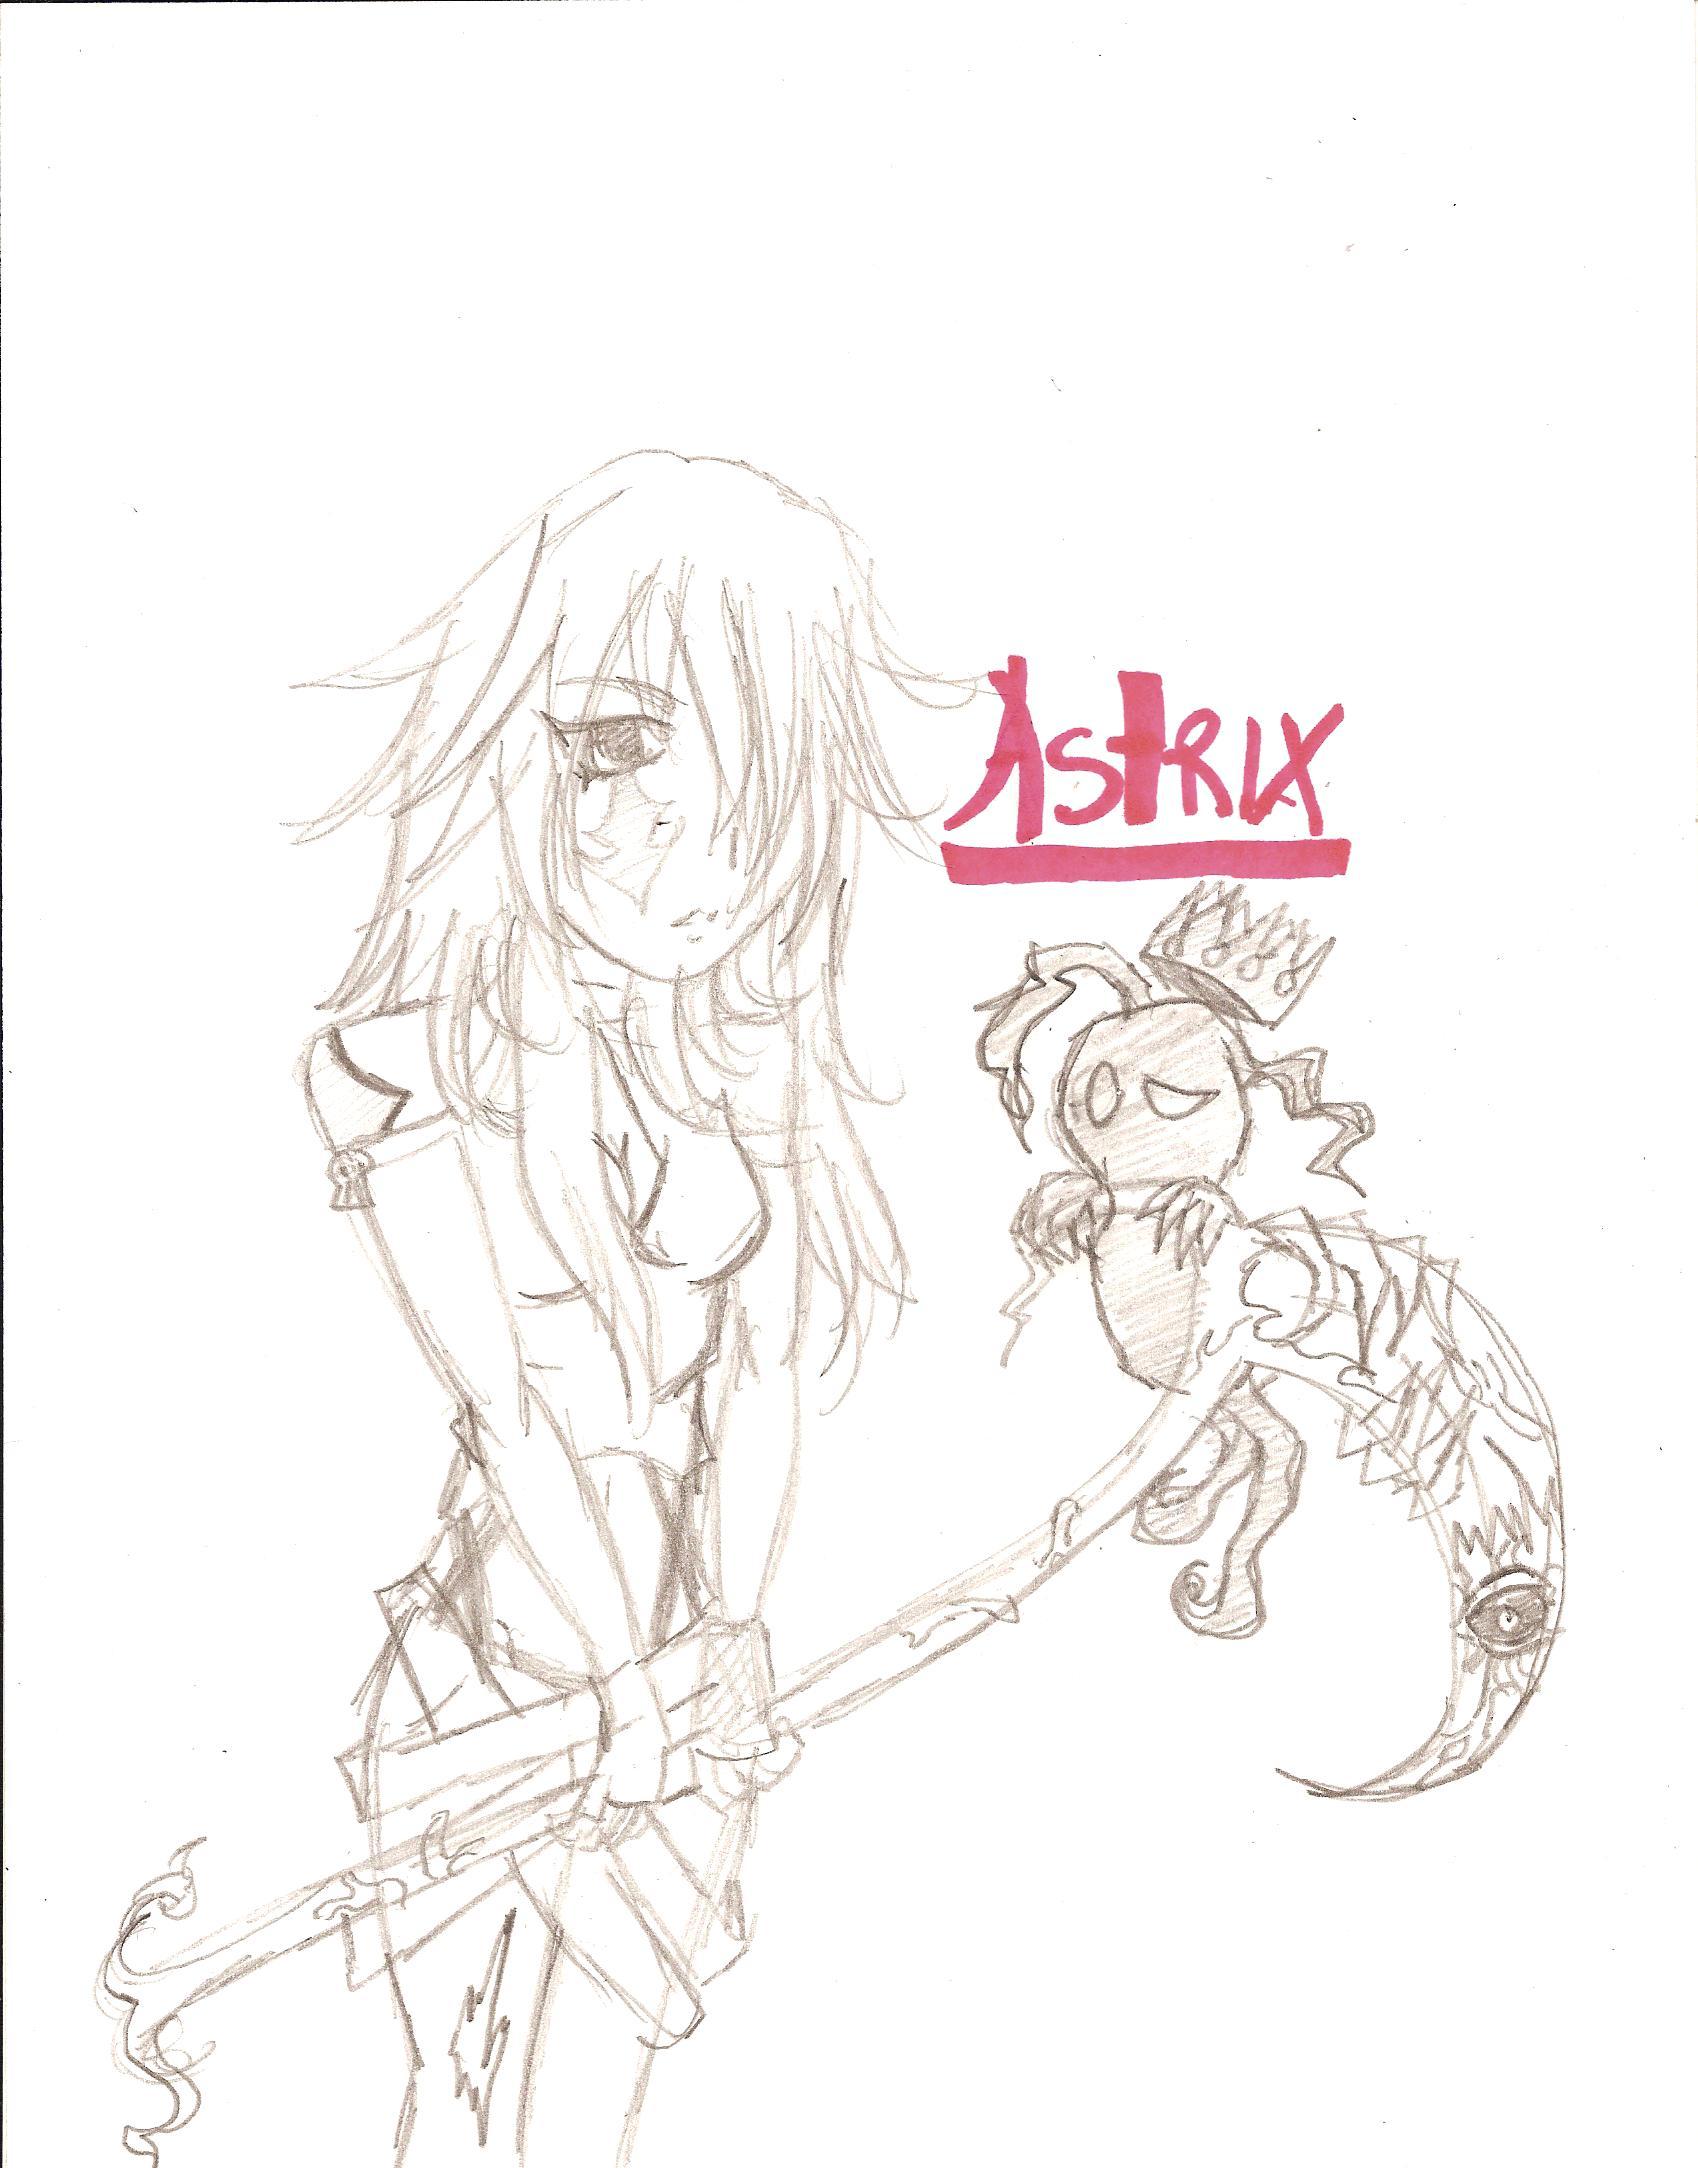 Astrix by Sesshomaru1111